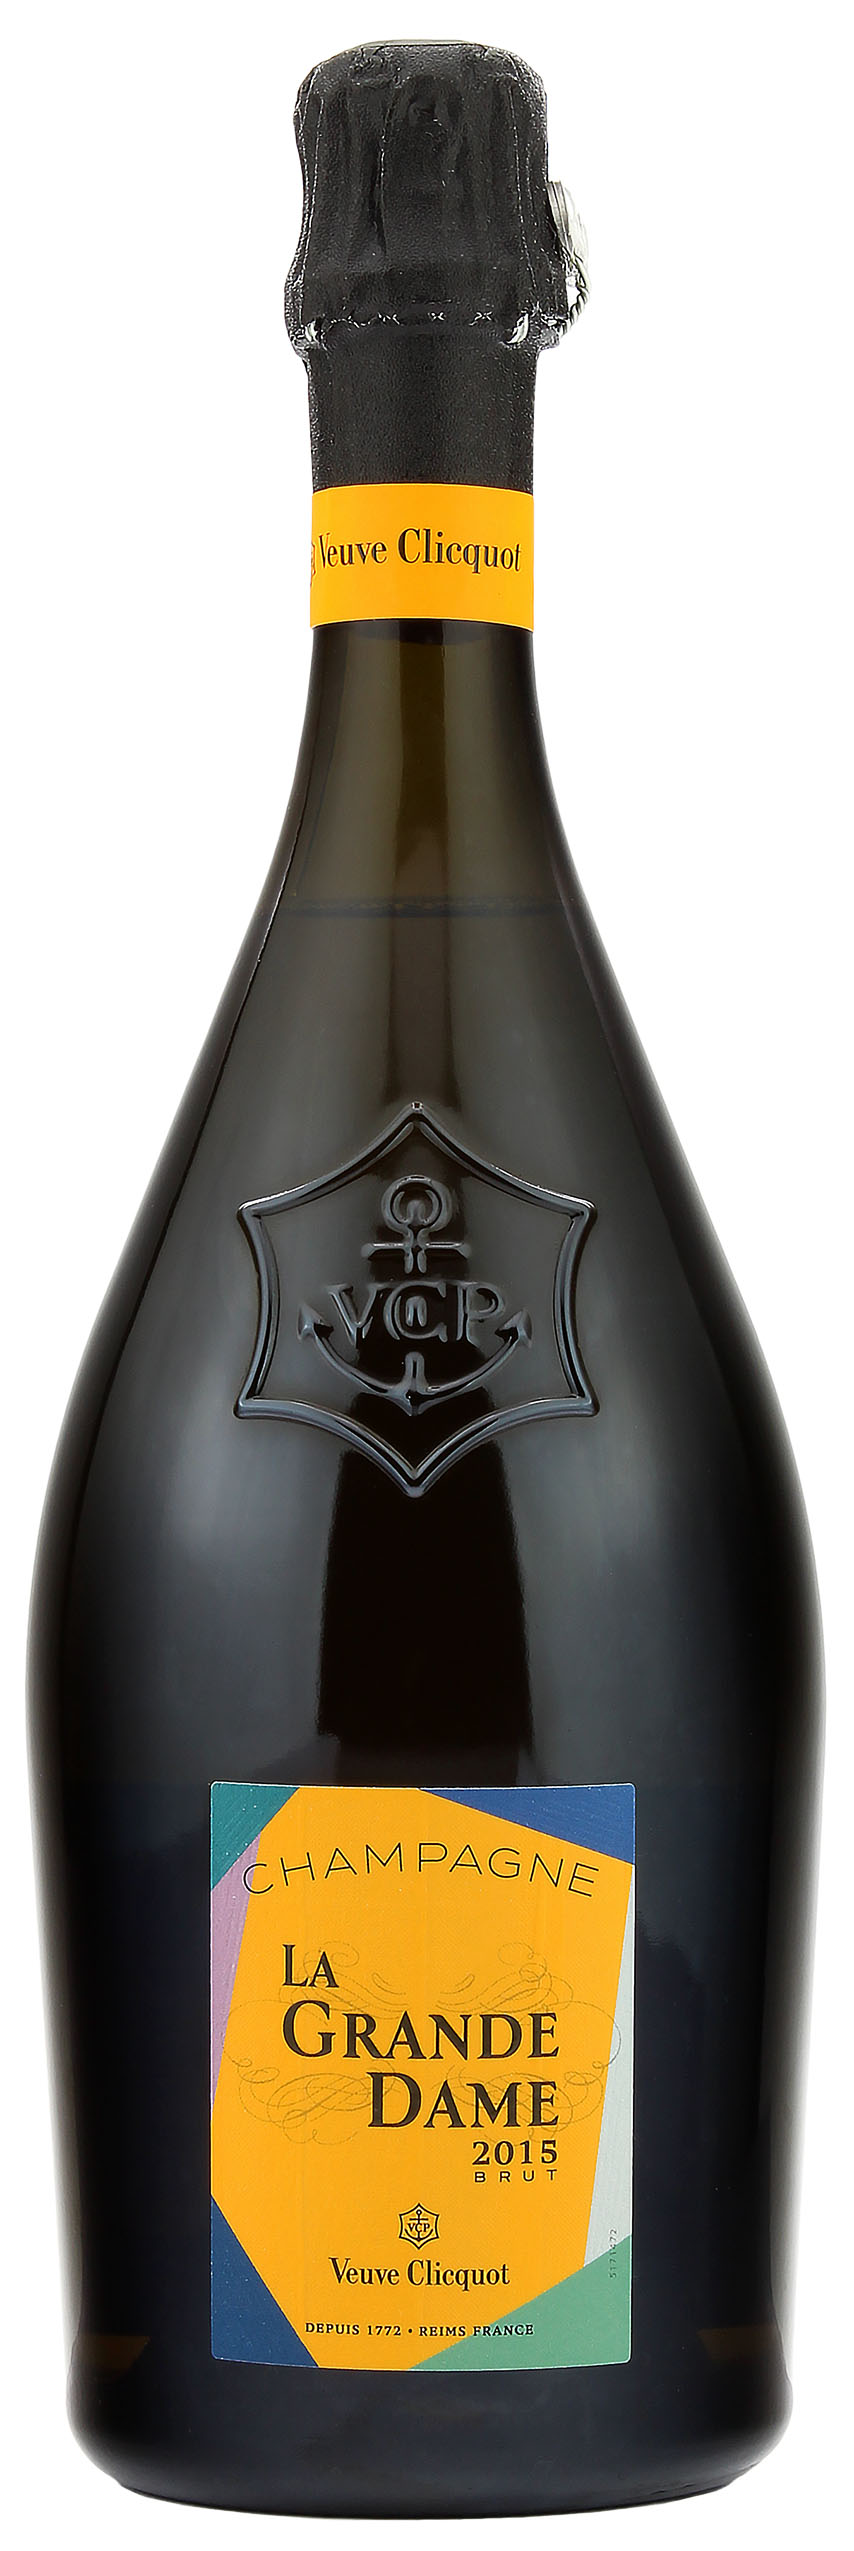 Veuve Clicquot Champagner La Grande Dame Limited Edition Vintage 2015 12.5% 0,75l